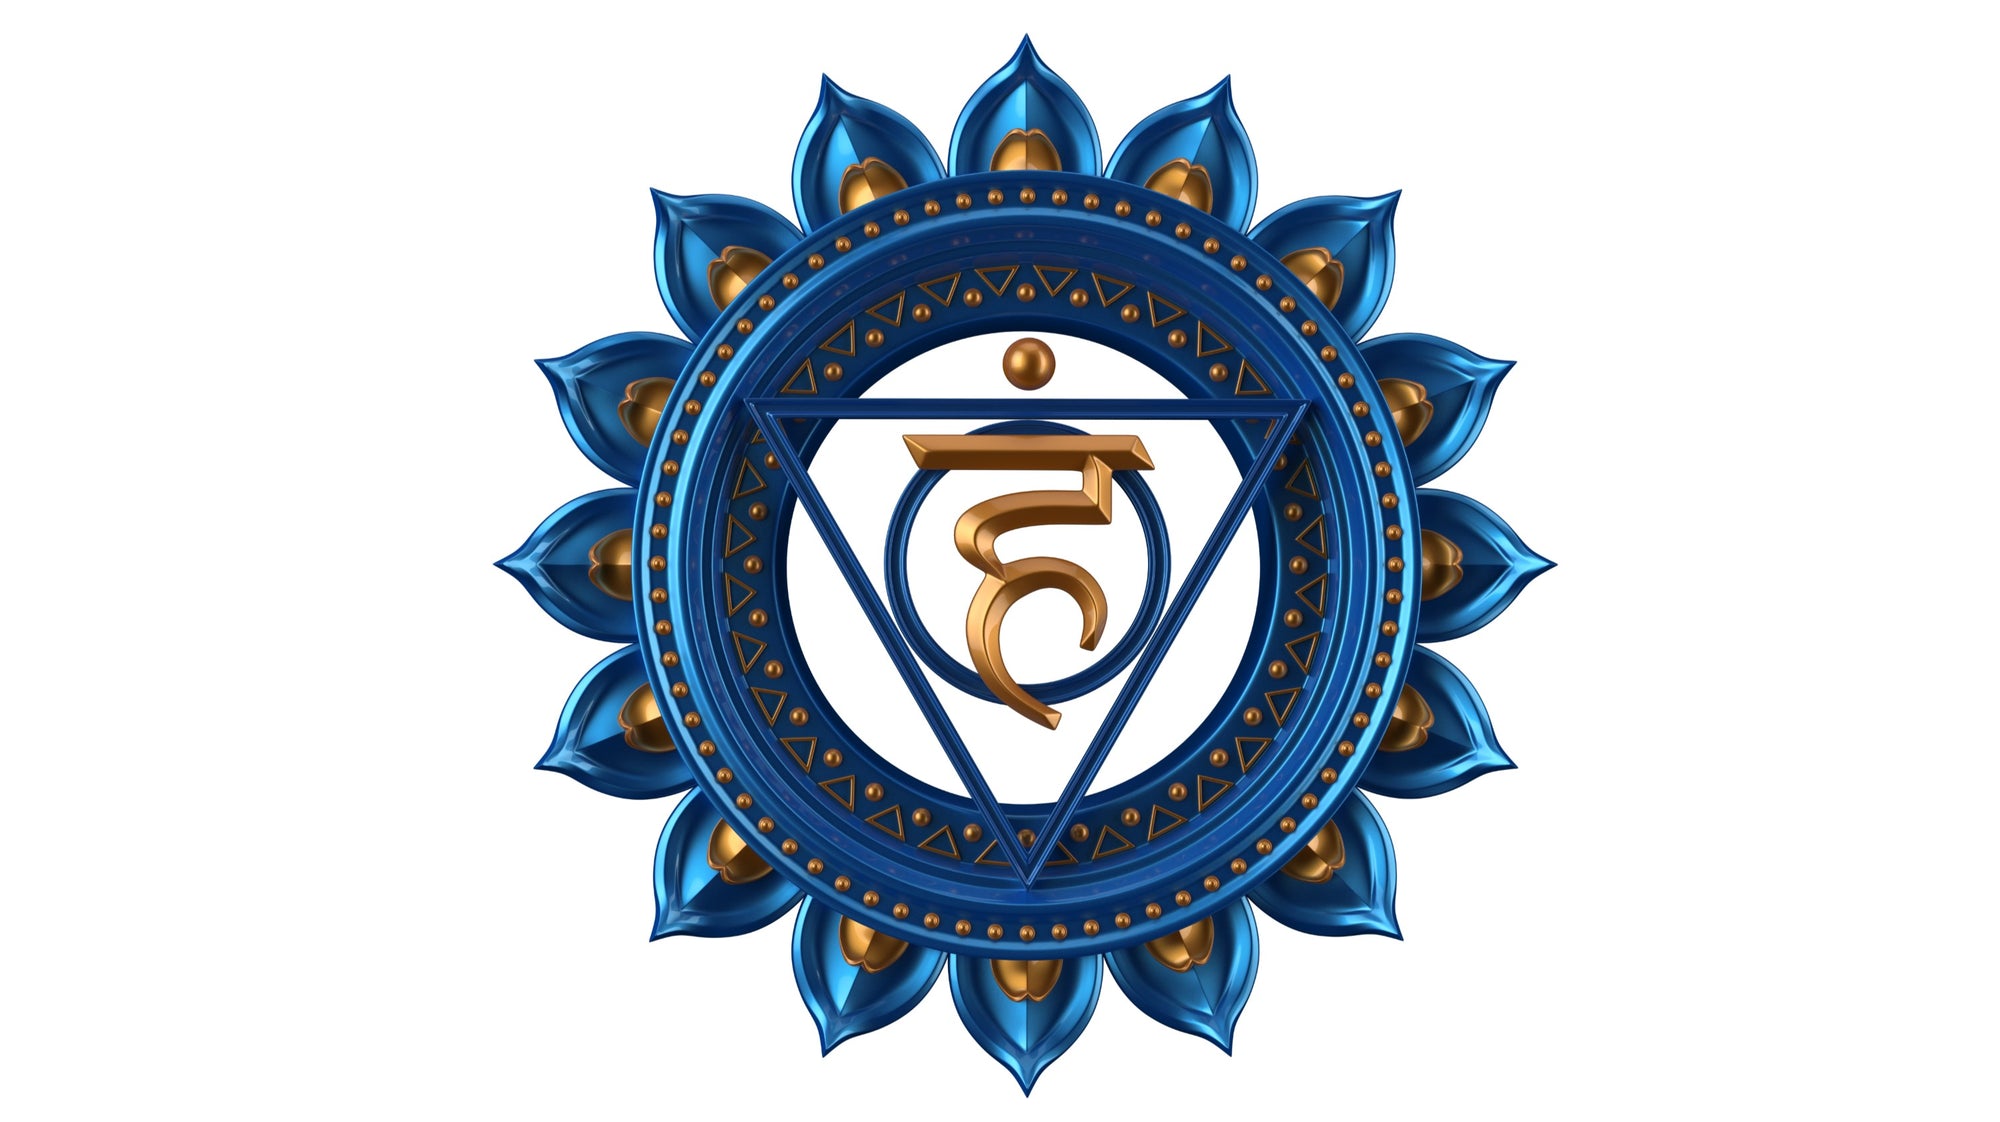 Image of the throat chakra - Vishuddha symbol